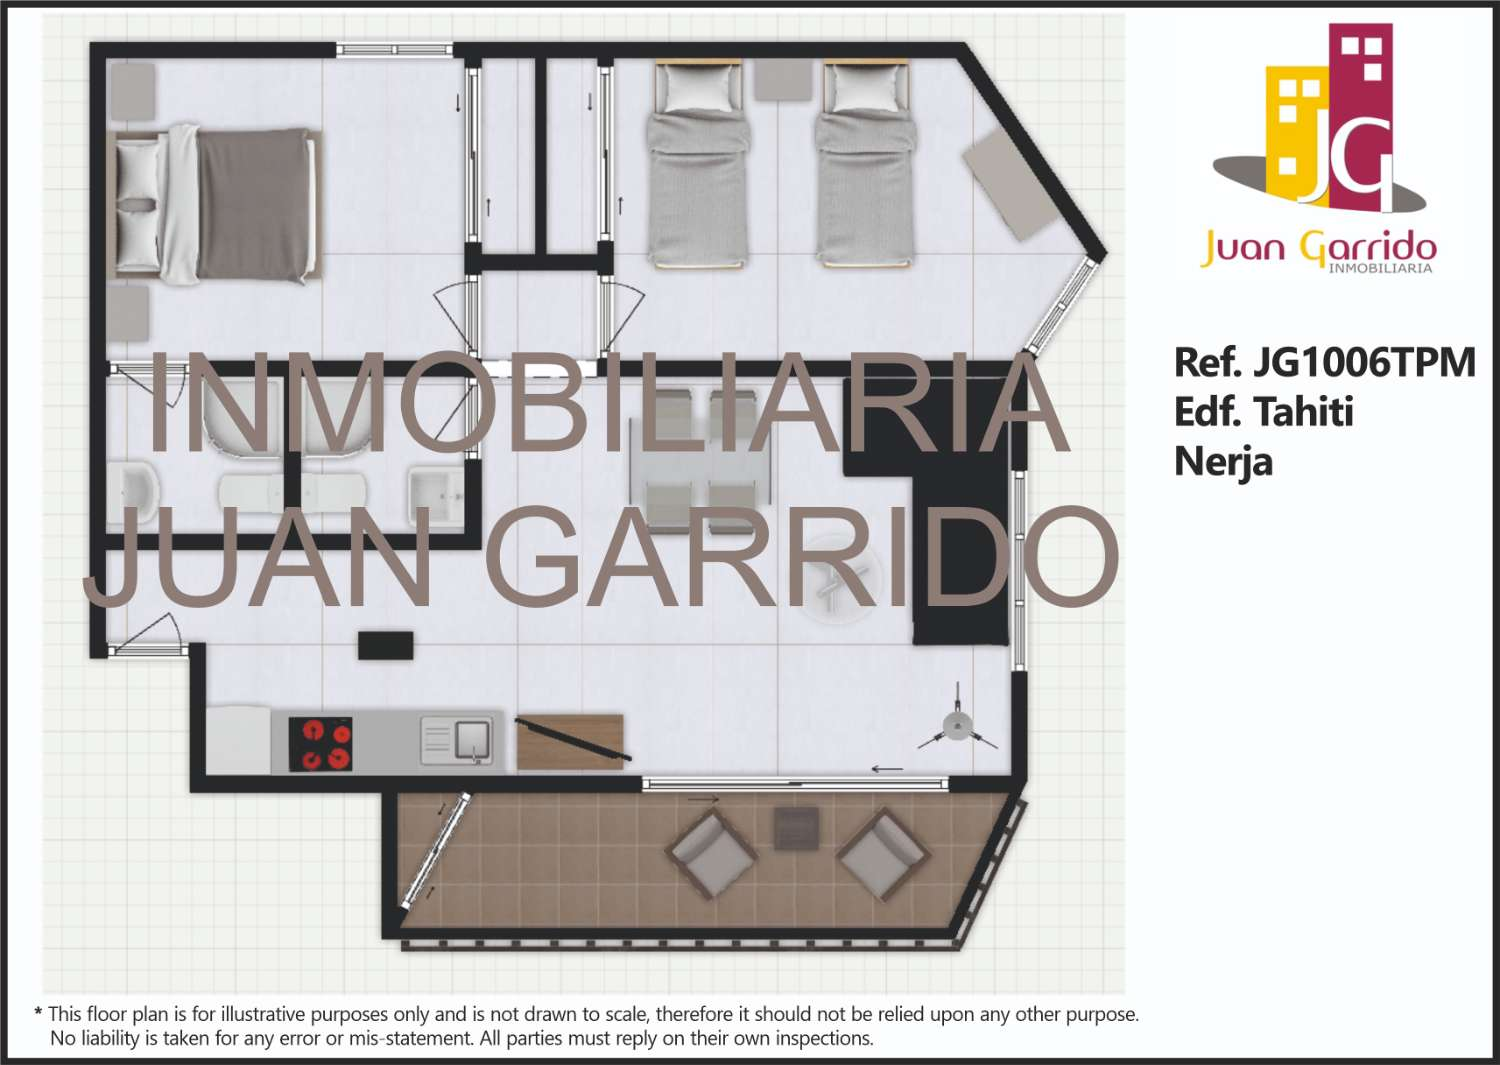 Top floor apartment for sale in Nerja, Burriana beach area